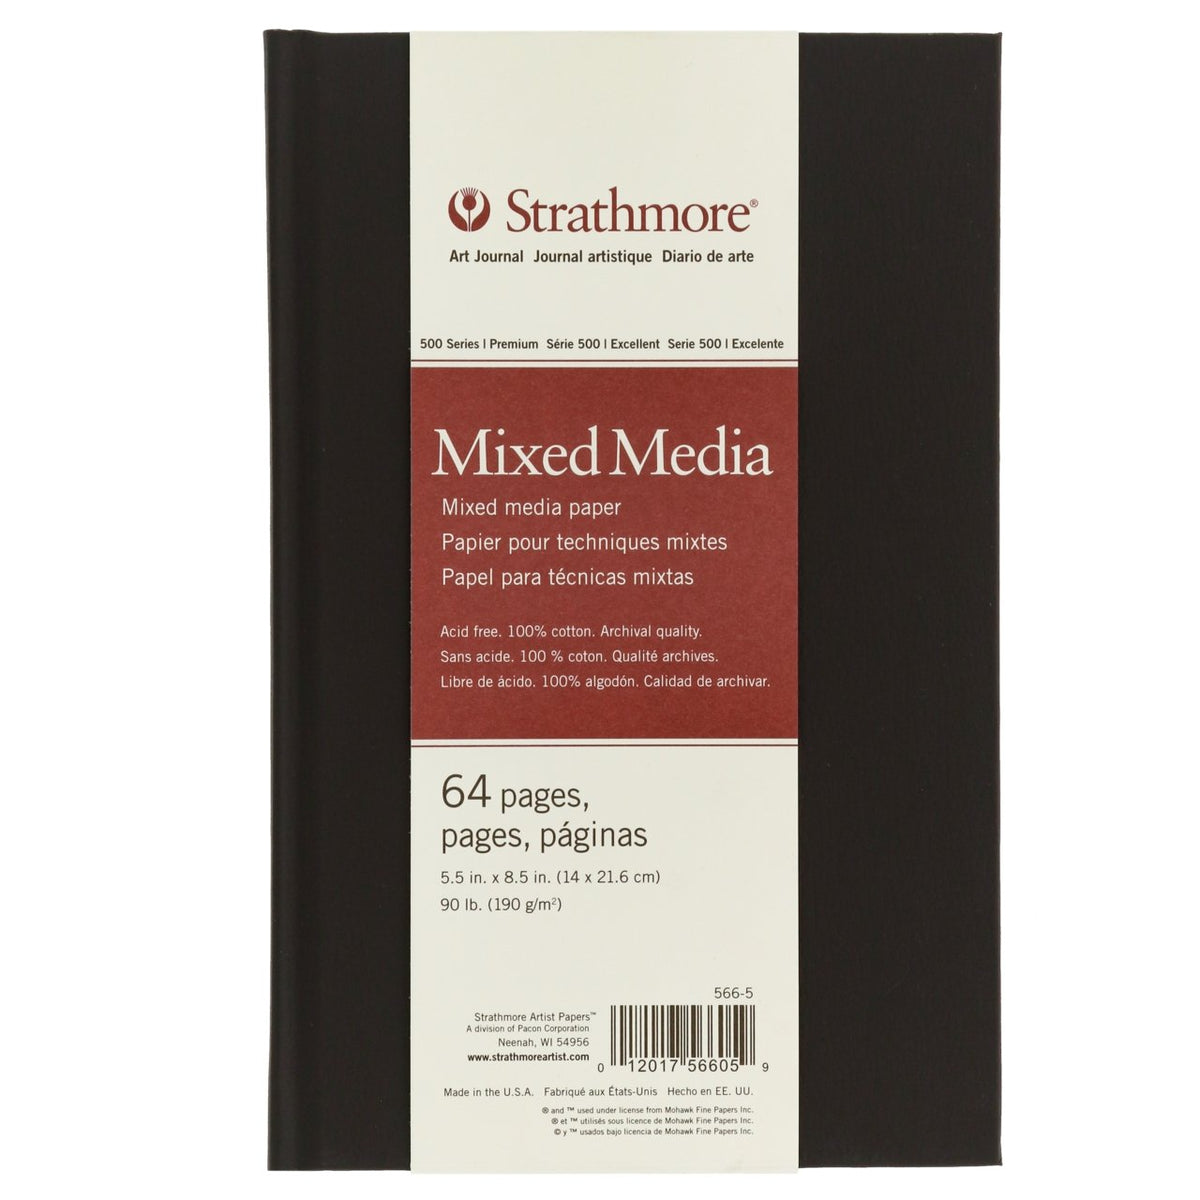 Strathmore 500 Series Hardcover Mixed Media Art Journal 5.5x8.5 inch - merriartist.com